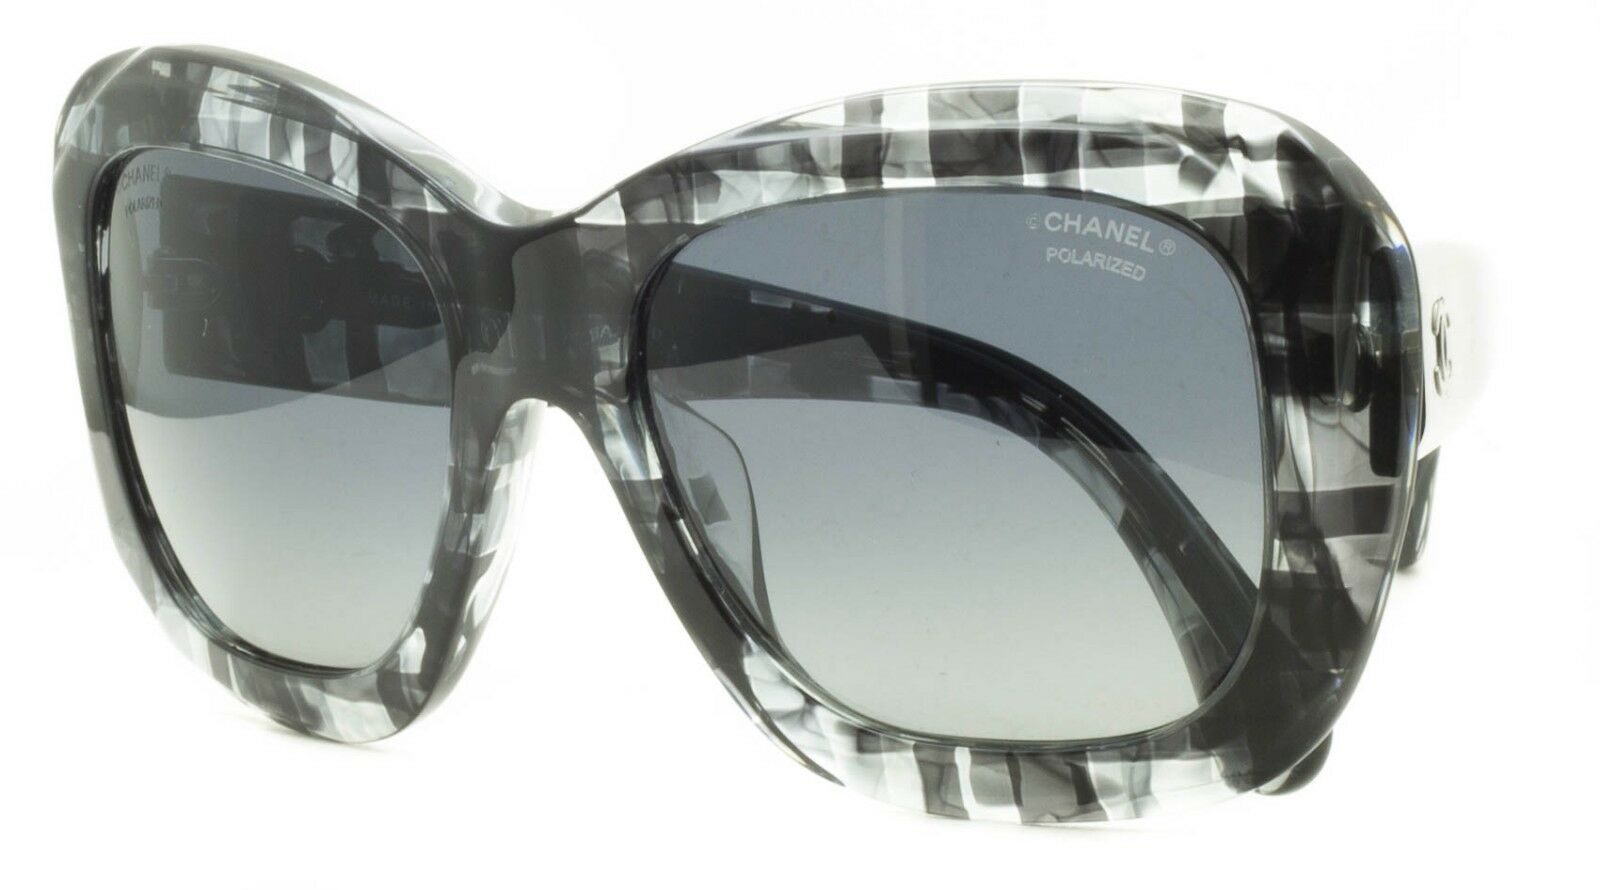 CHANEL 3364 1534 47mm Eyewear FRAMES Eyeglasses RX Optical Glasses New -  Italy - GGV Eyewear